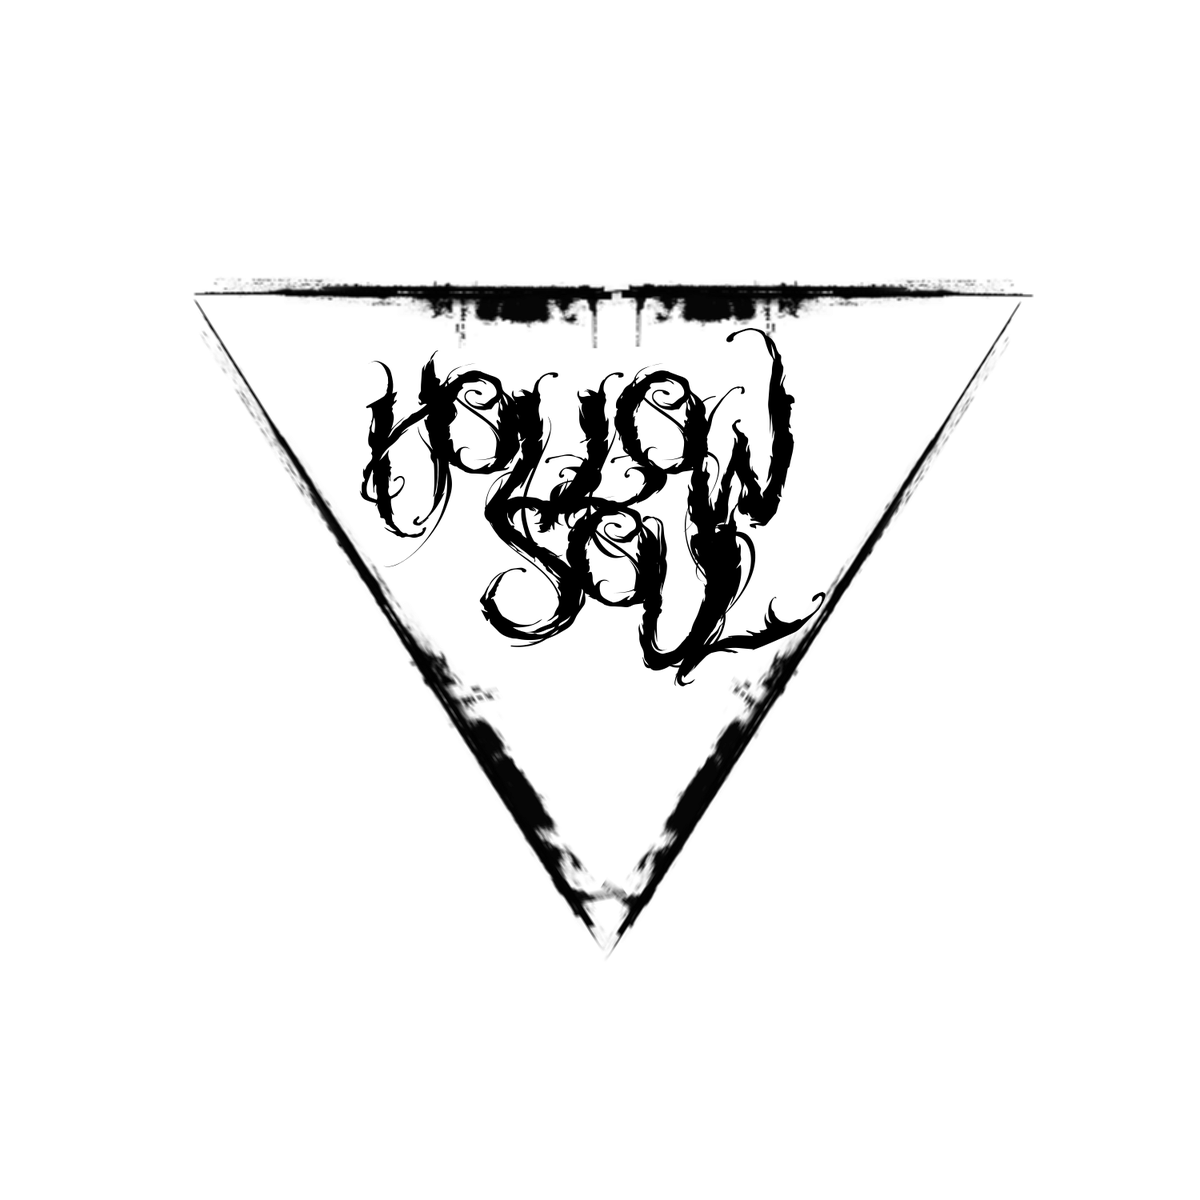 Aaaaaand the man attacks again!

I love this logo I made!

What's your opinion? 

If wanna have an extreme logo like this one DM me!

Hollow Soul

#blackmetallogo #metallogos #artovabyss #logos #bandlogo #blackmetal